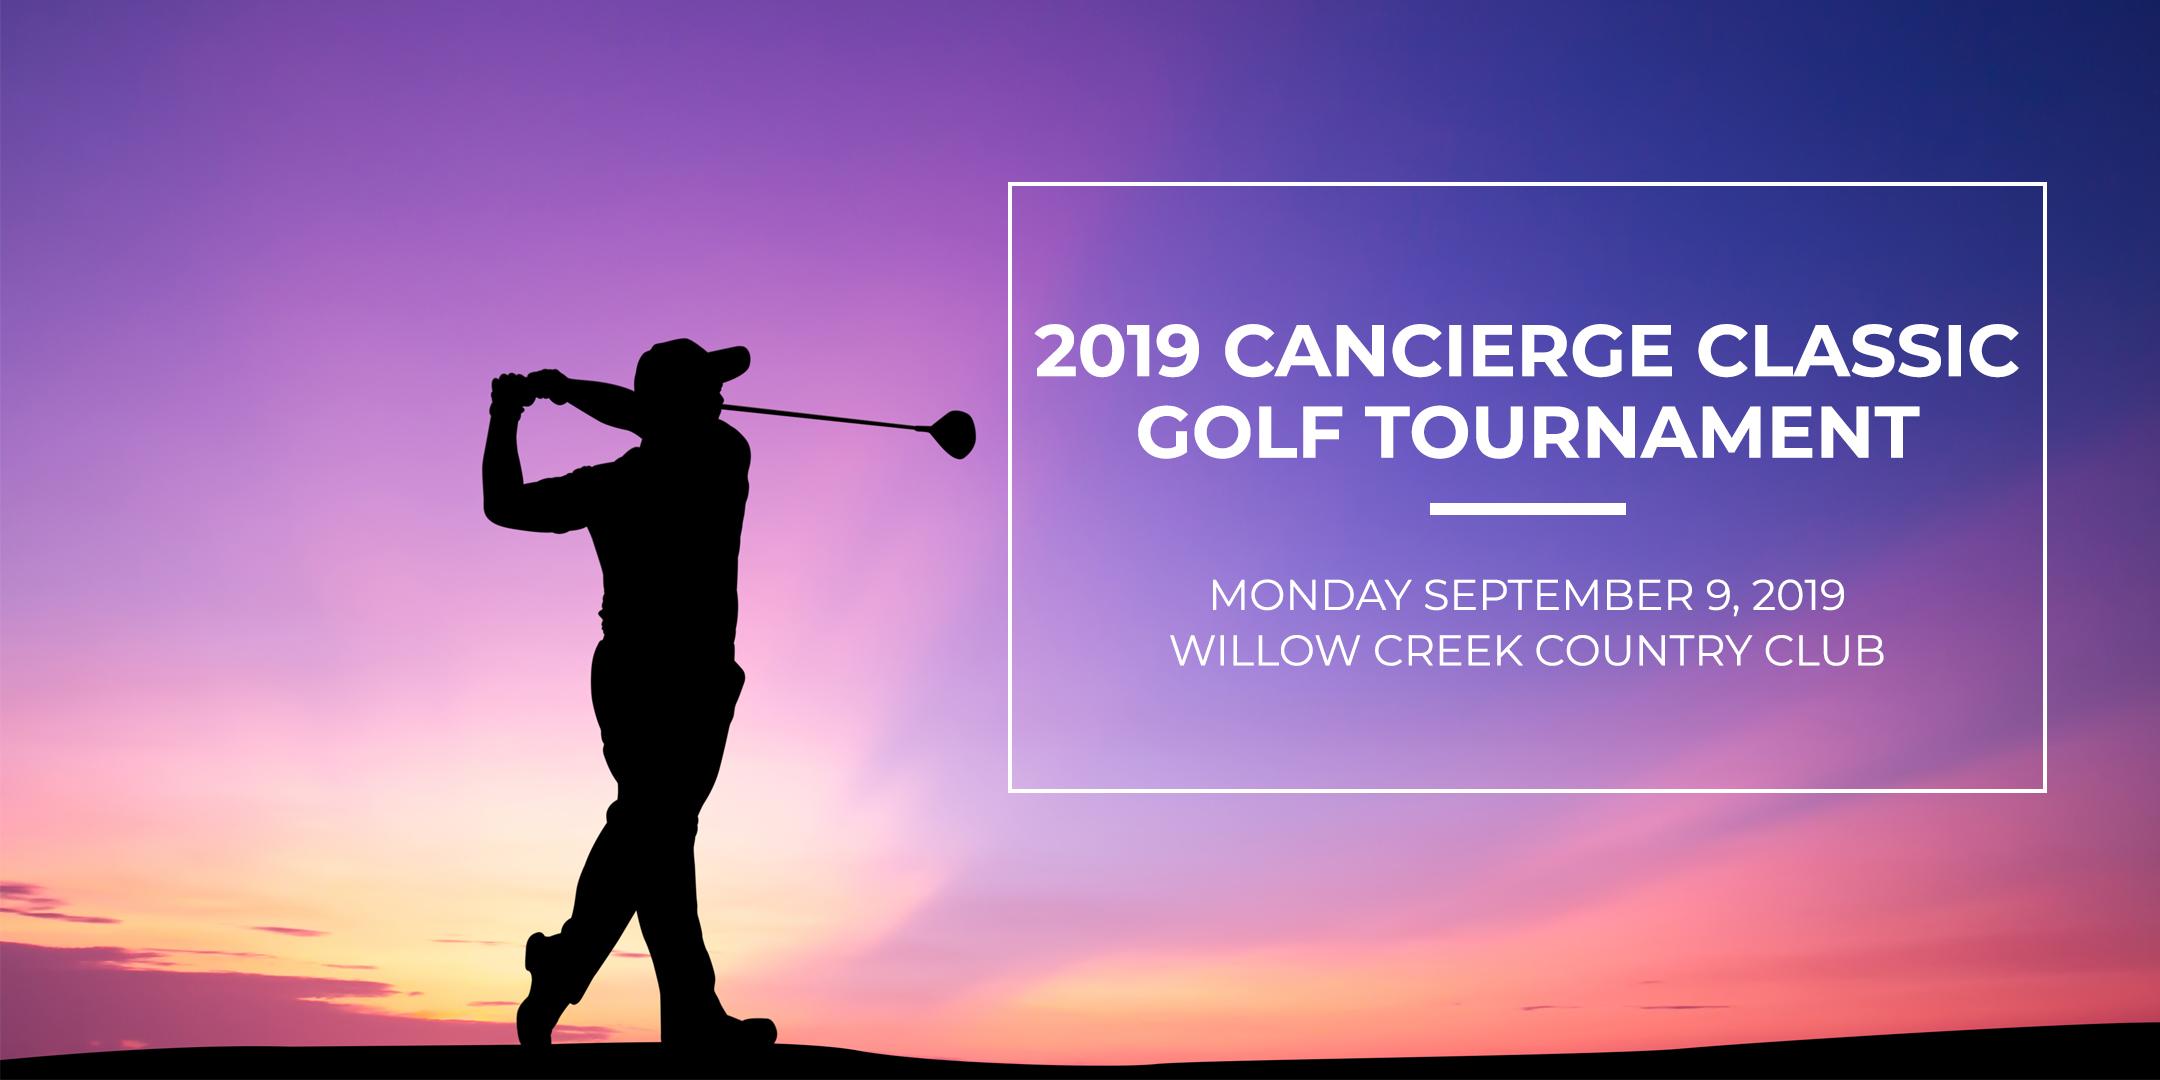 2019 Cancierge Classic Golf Tournament